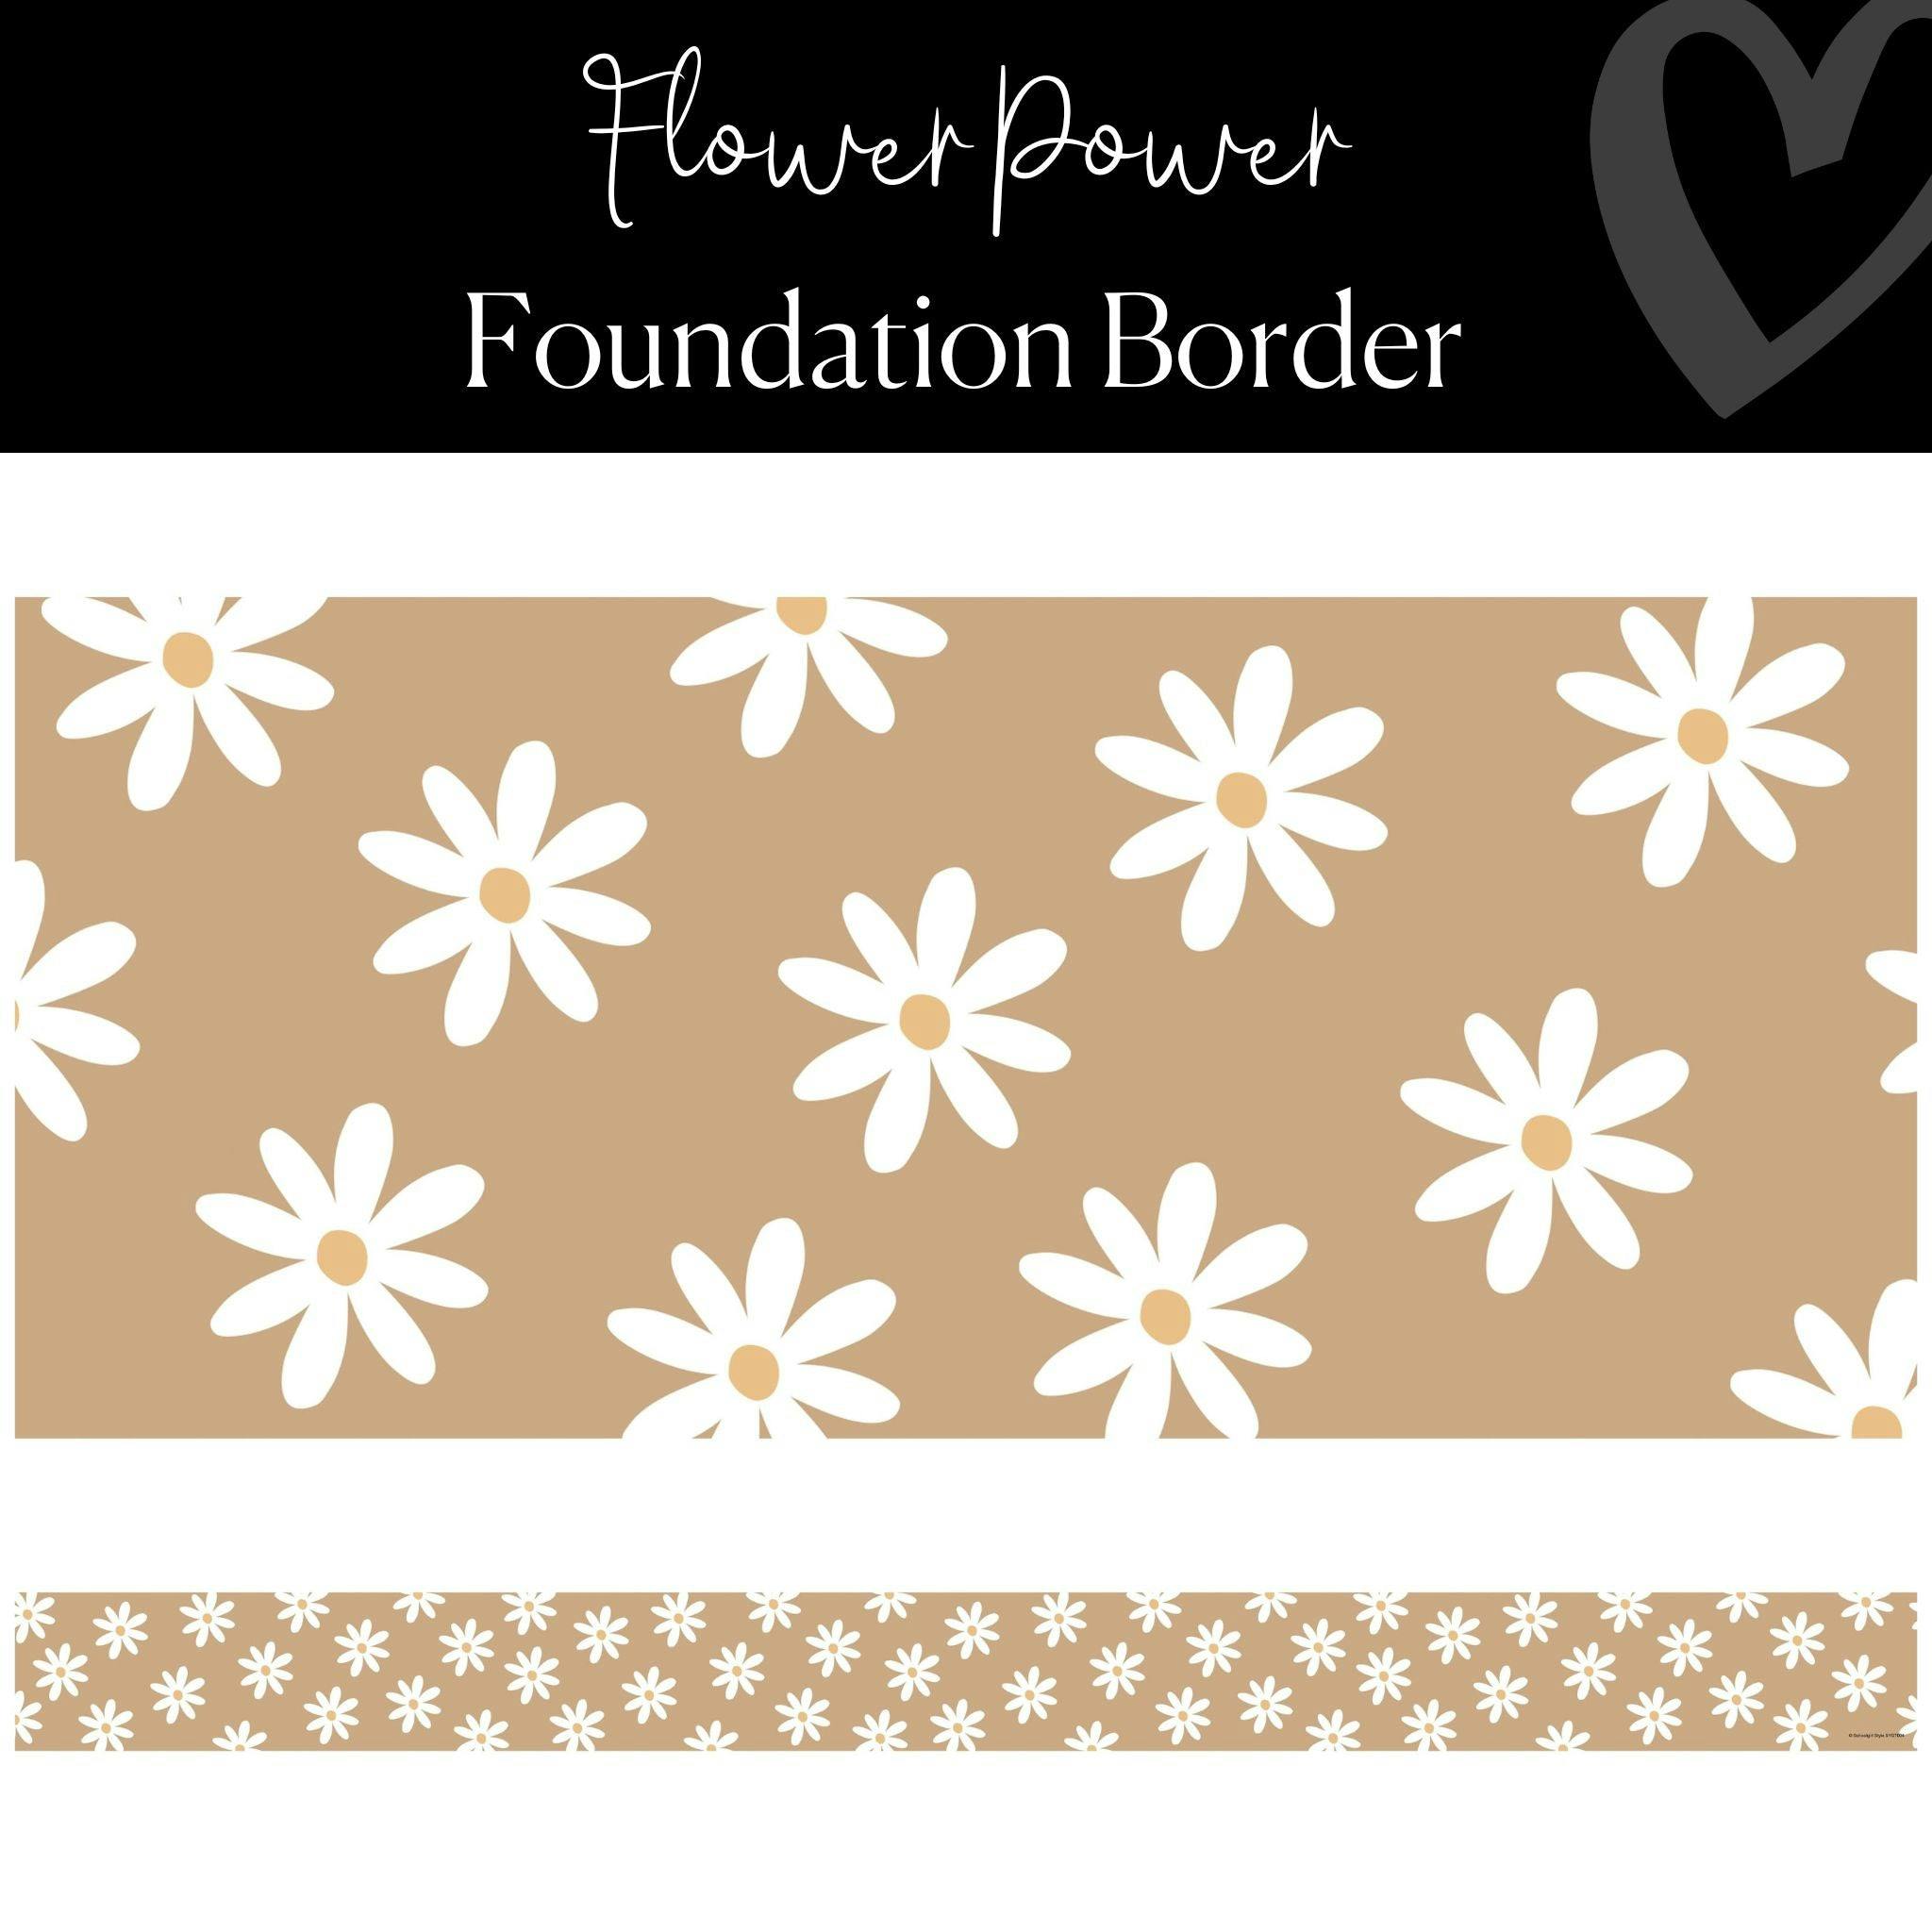 Groovy Floral Bulletin Board Border | "Flower Power" Foundation Border | Vintage Classroom Decor | Schoolgirl Style